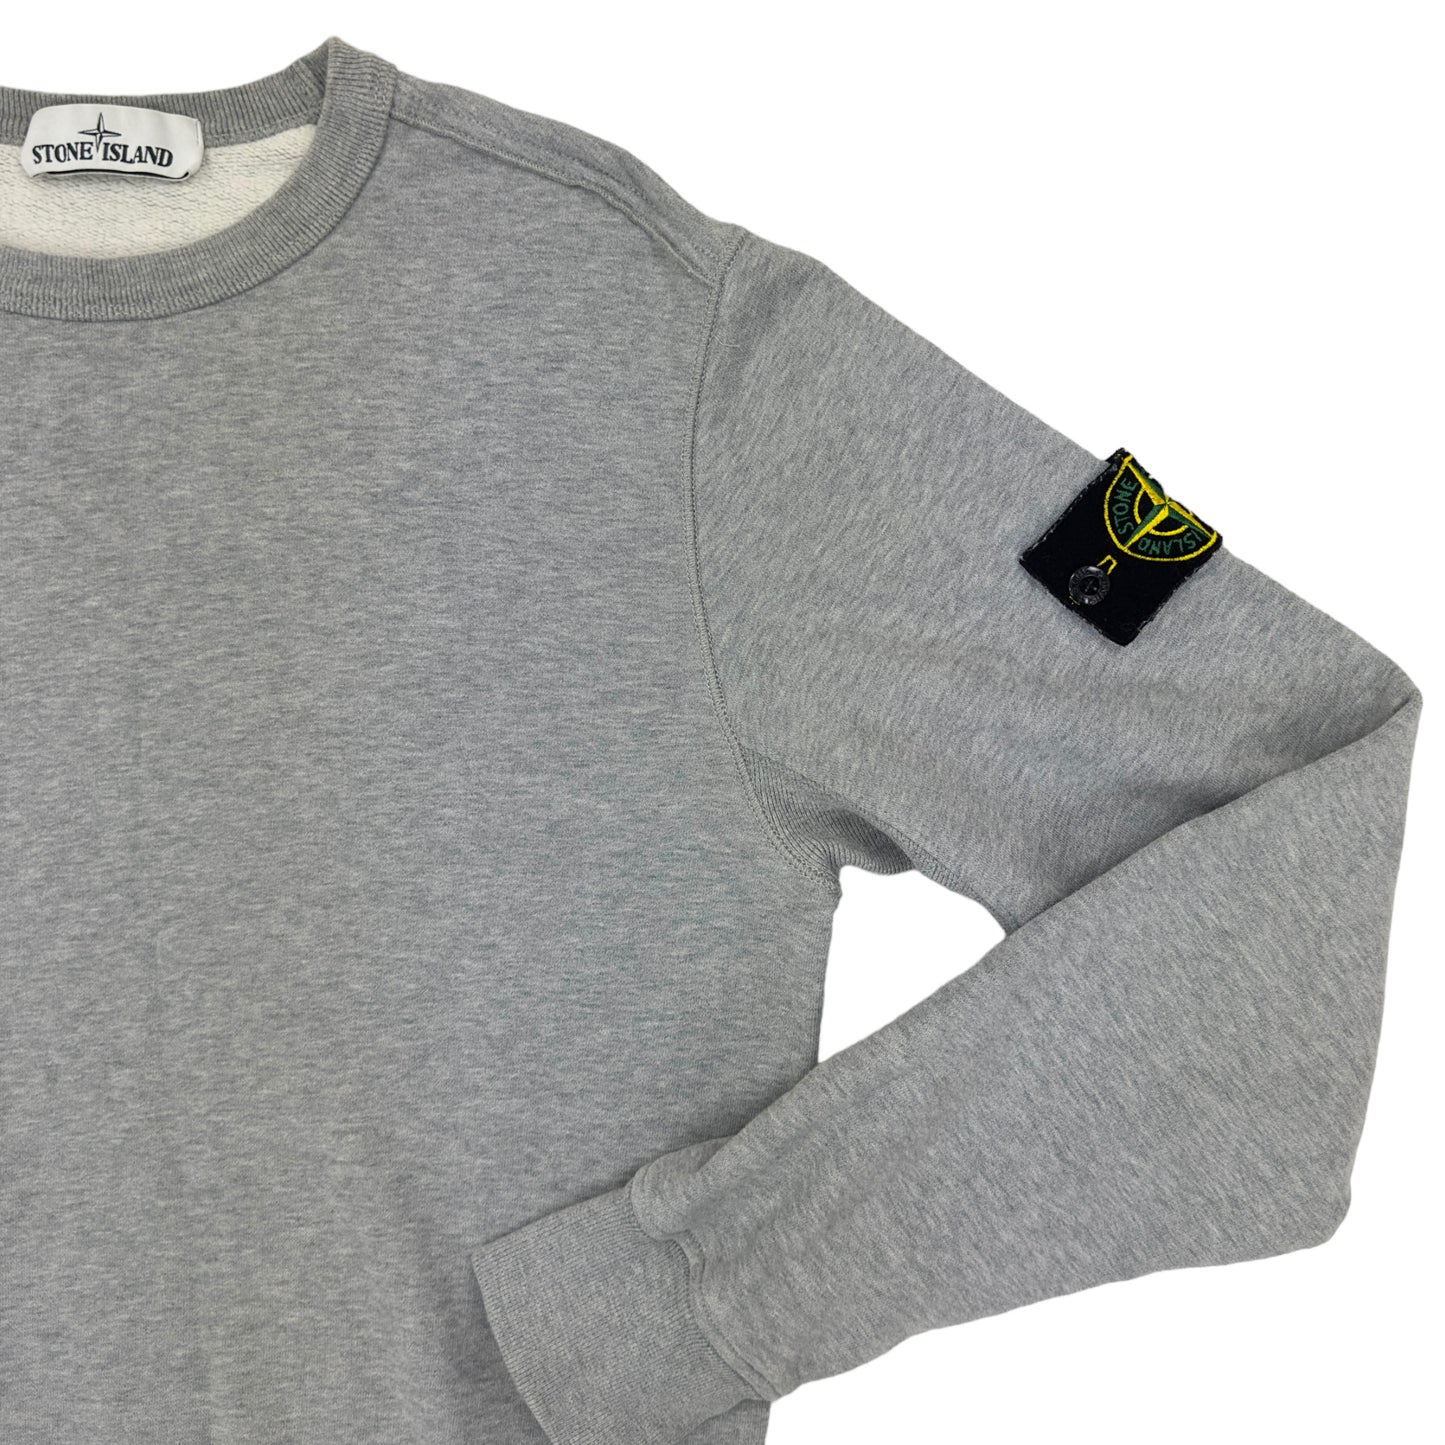 A/W 19 Stone Island Garment Dyed Crewneck Sweater